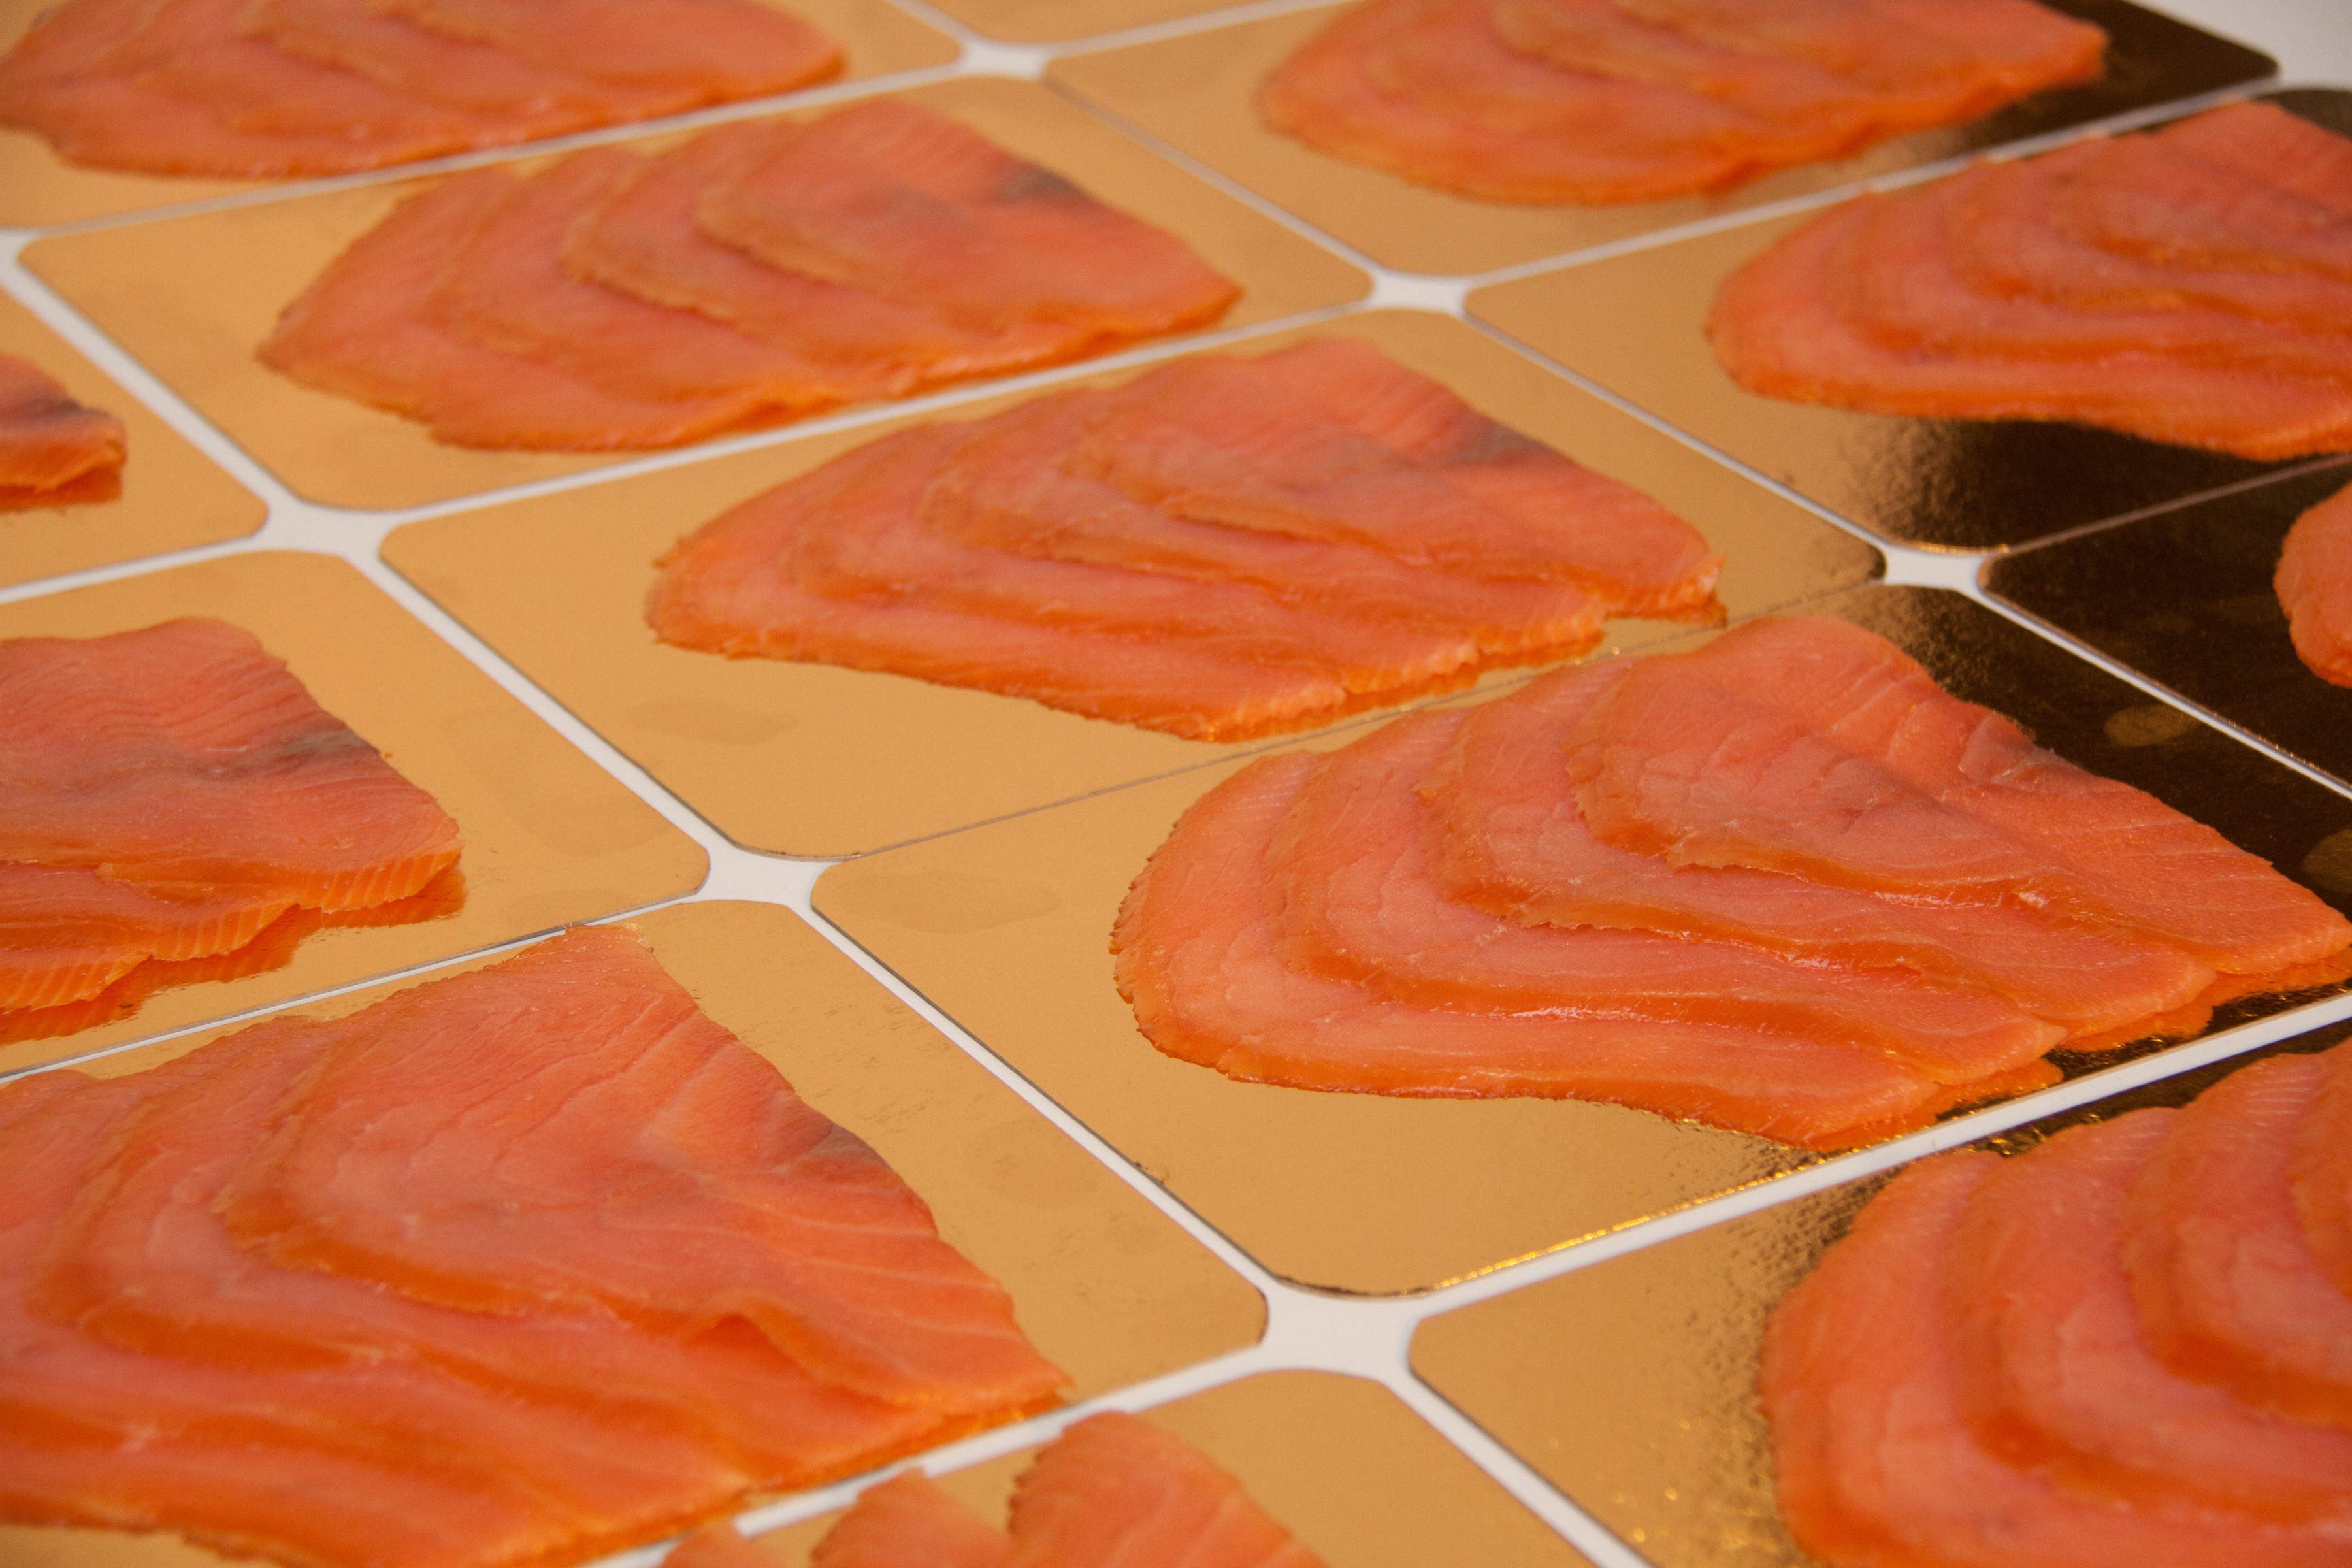 Salmon slicing expertise